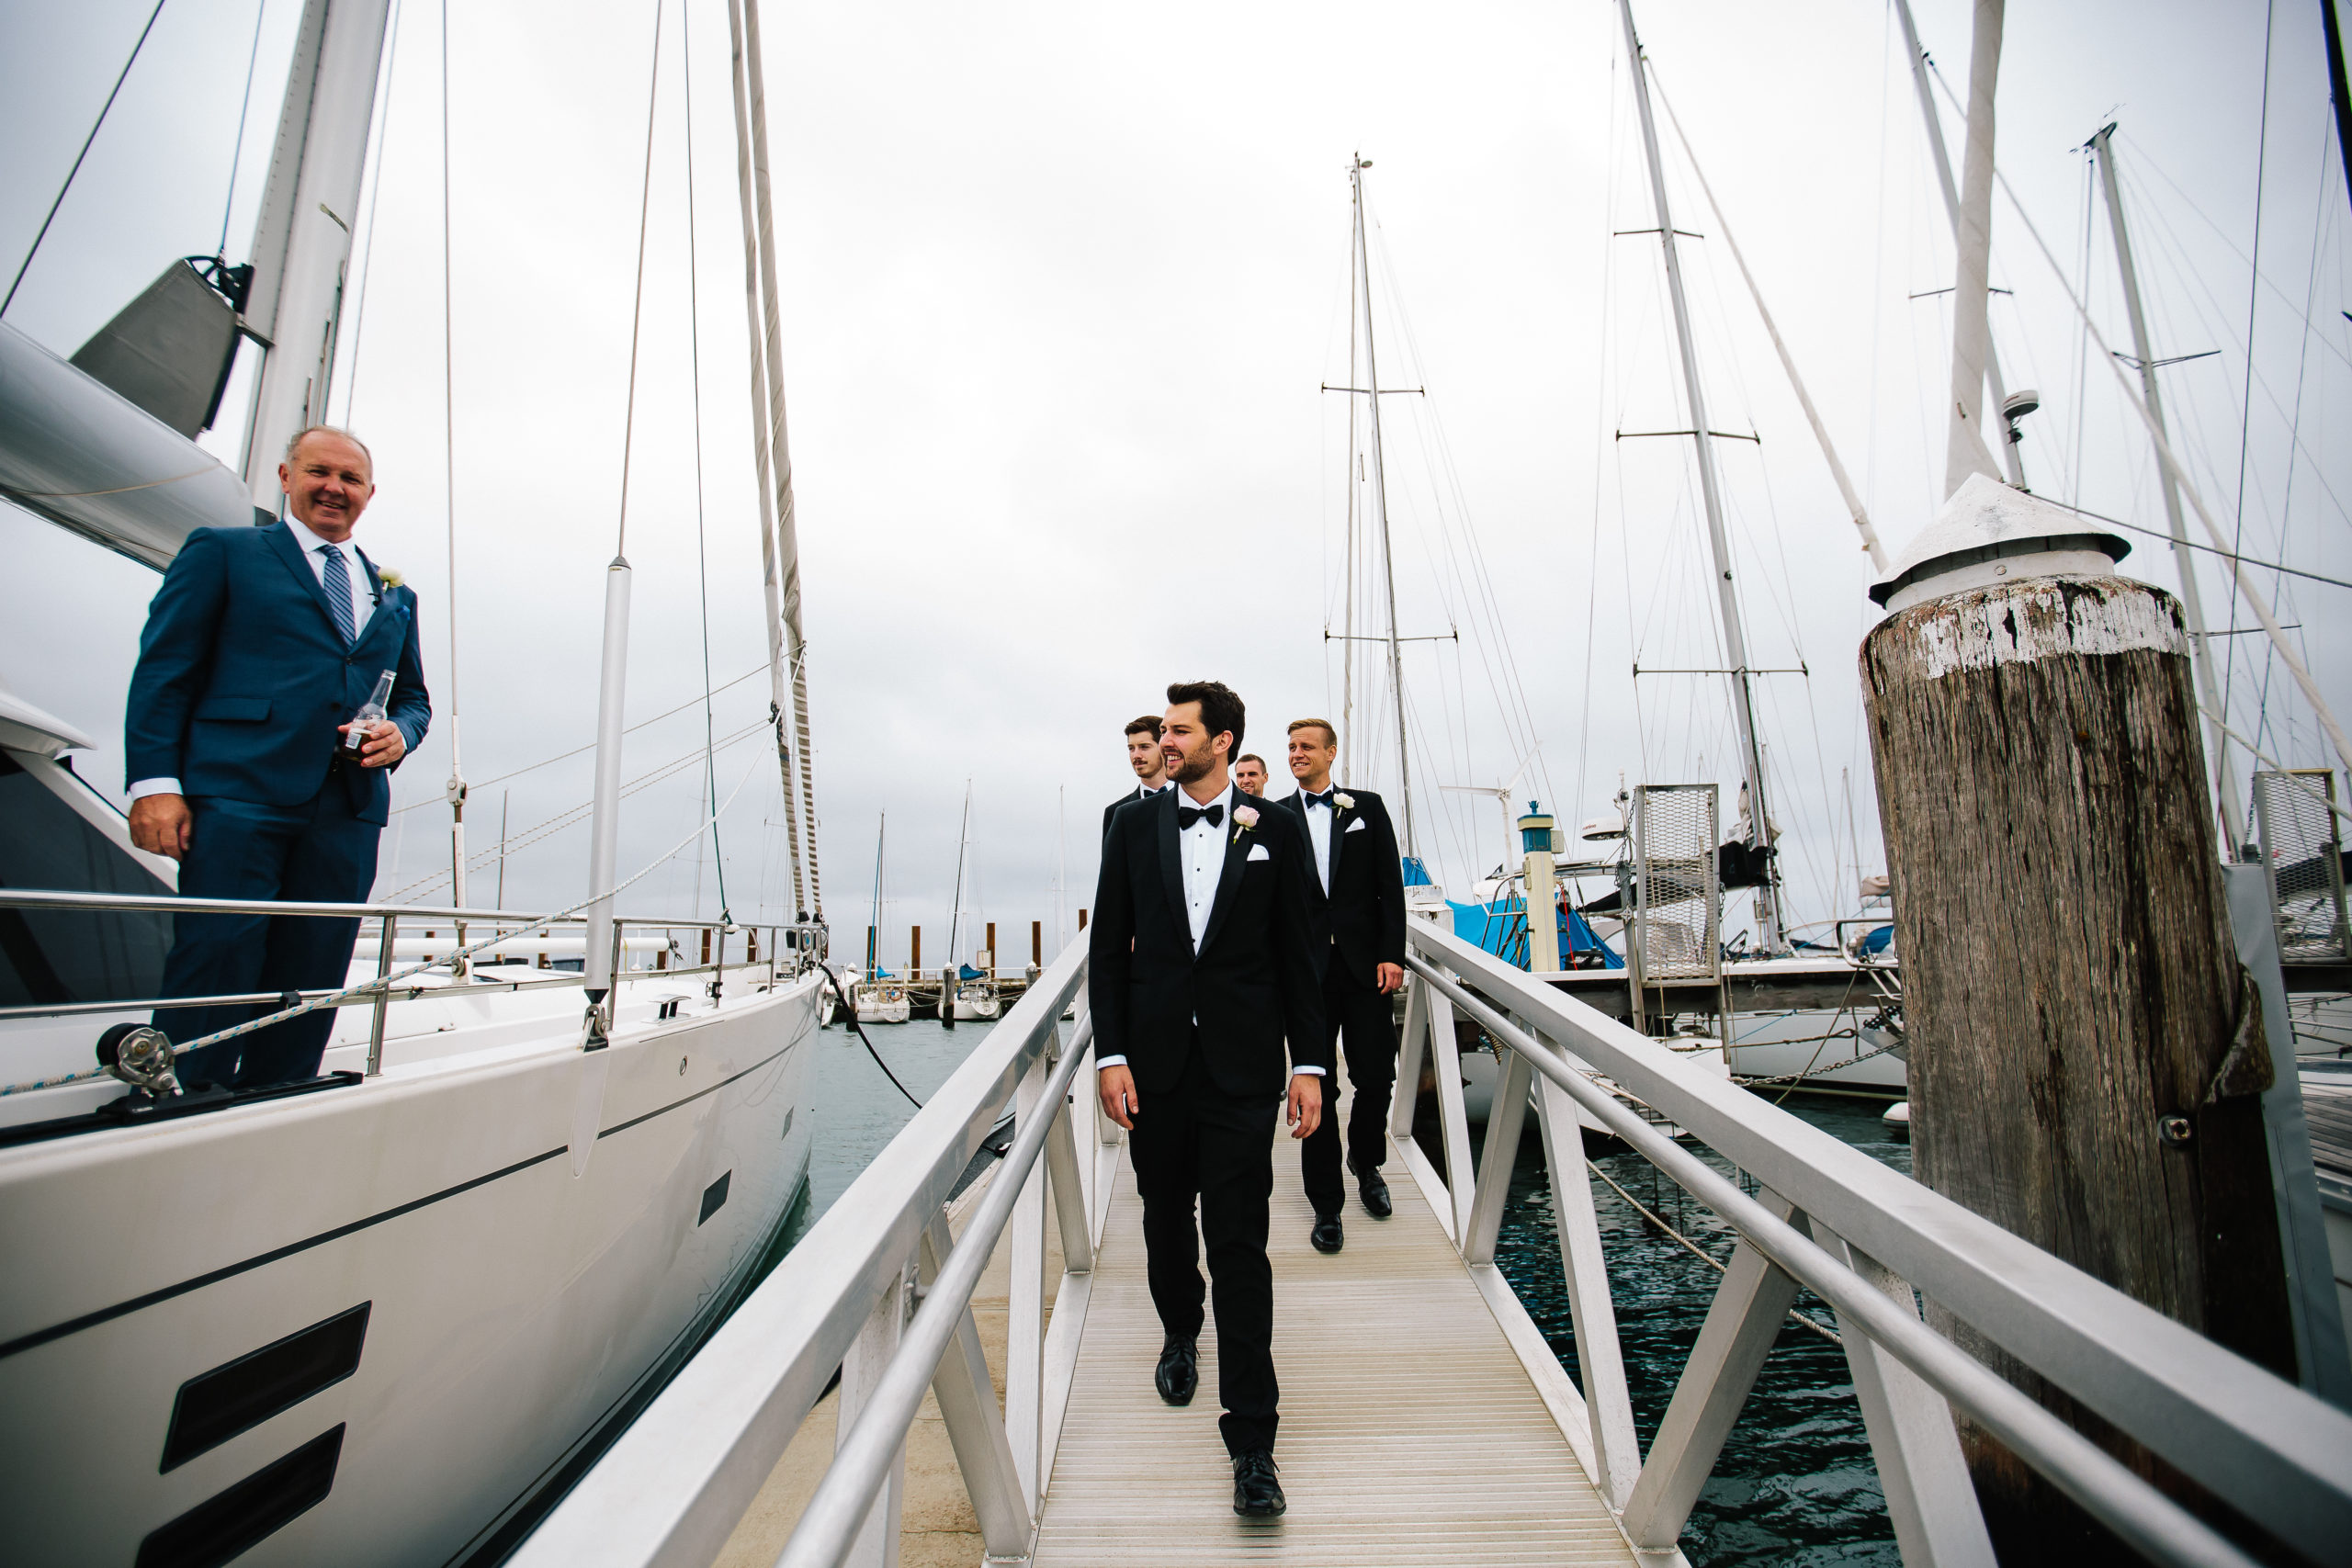 Groom and groomsmen in tuxedos